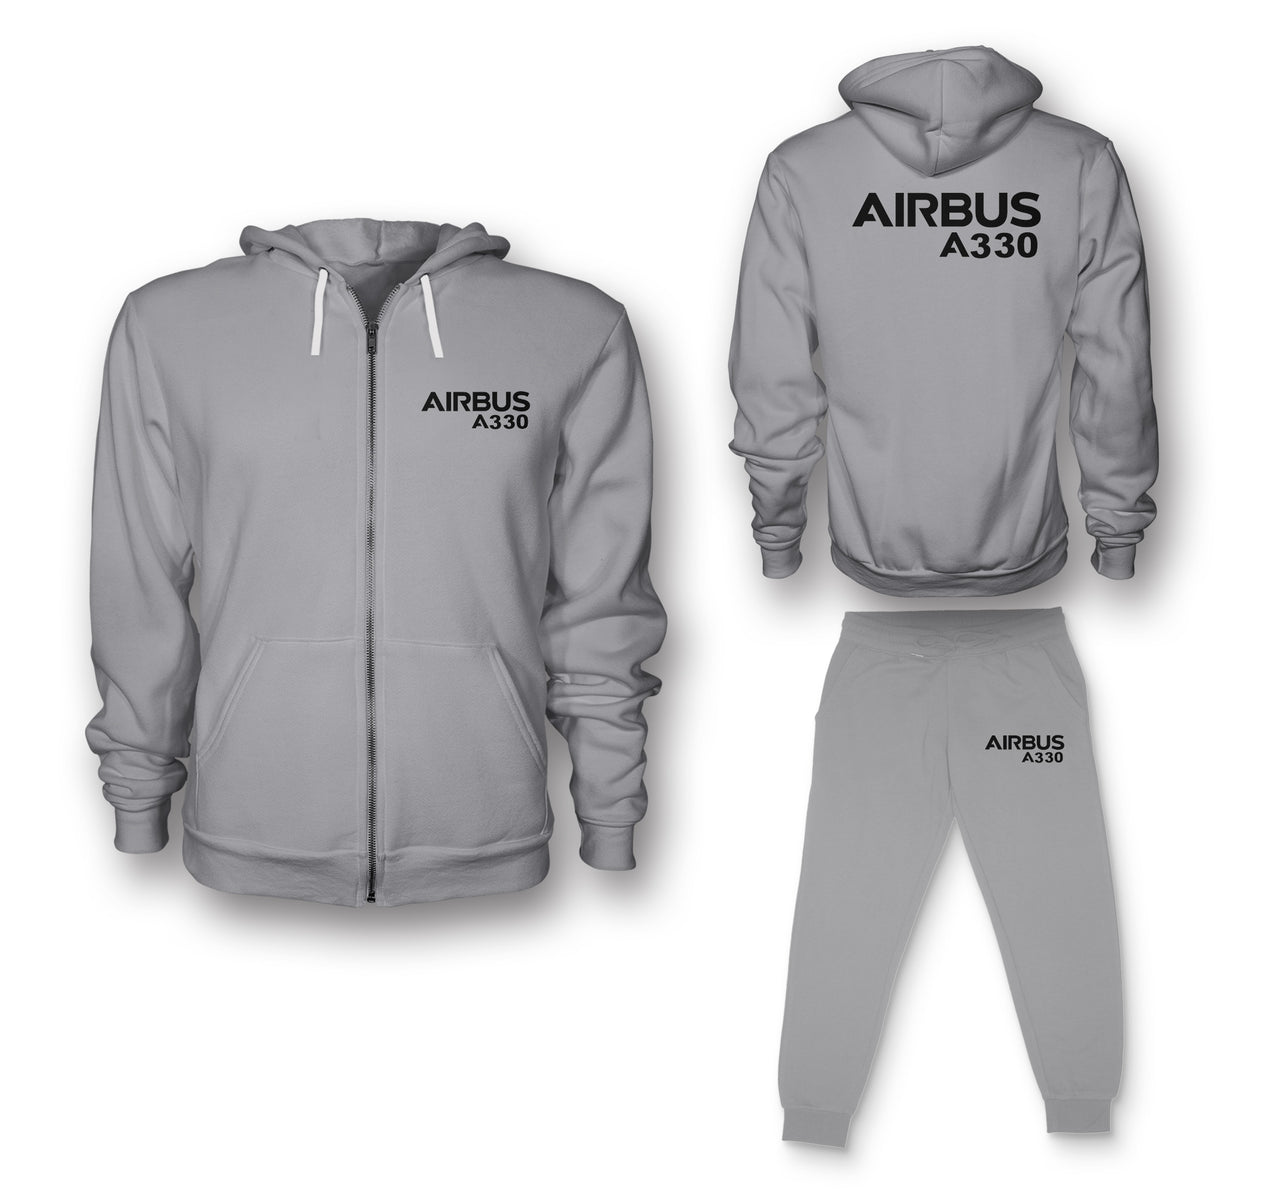 Airbus A330 & Text Designed Zipped Hoodies & Sweatpants Set